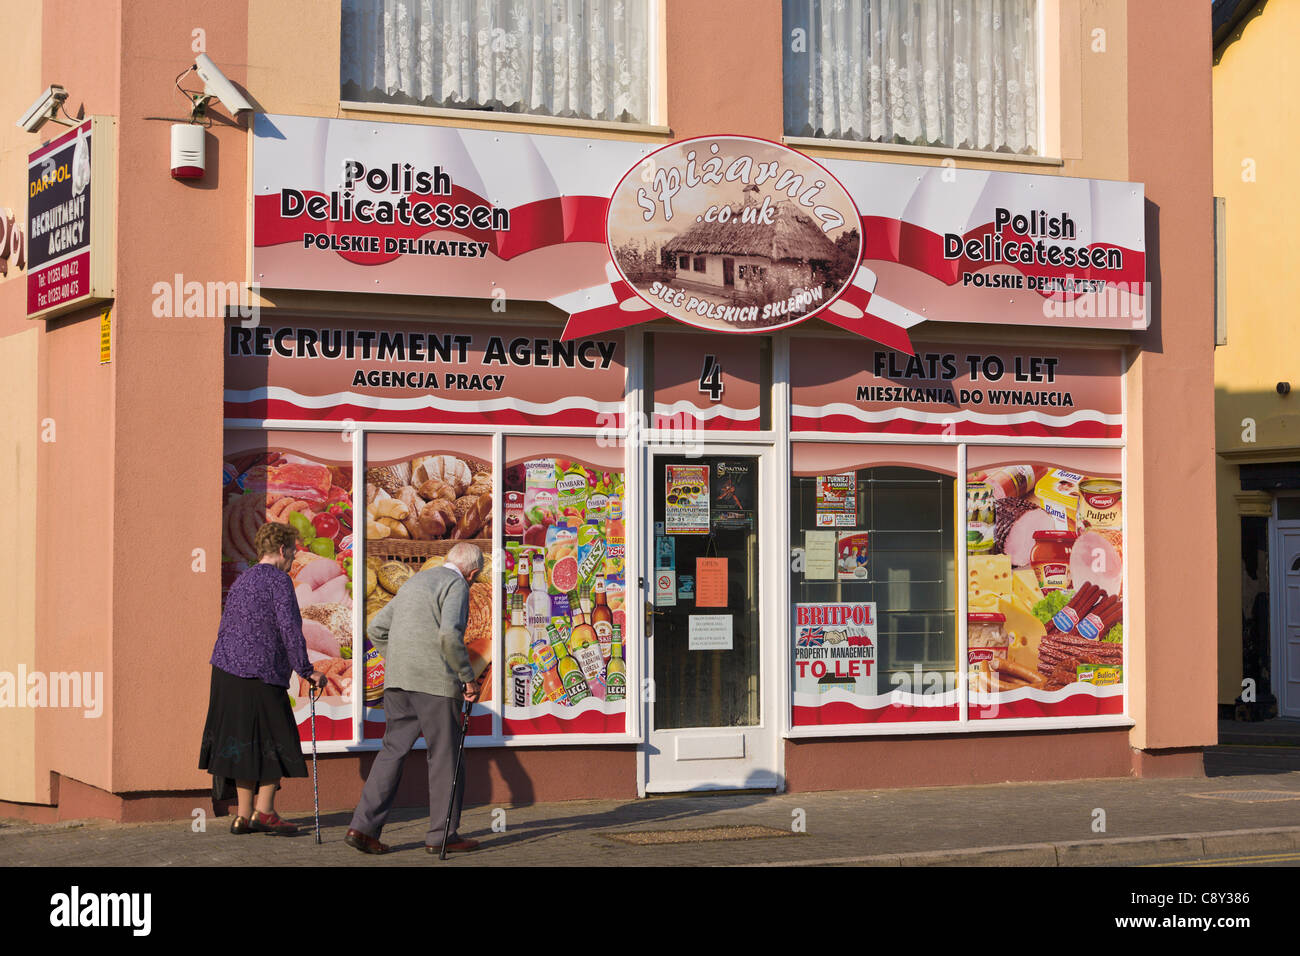 Polish delicatessen, Blackpool, England Stock Photo